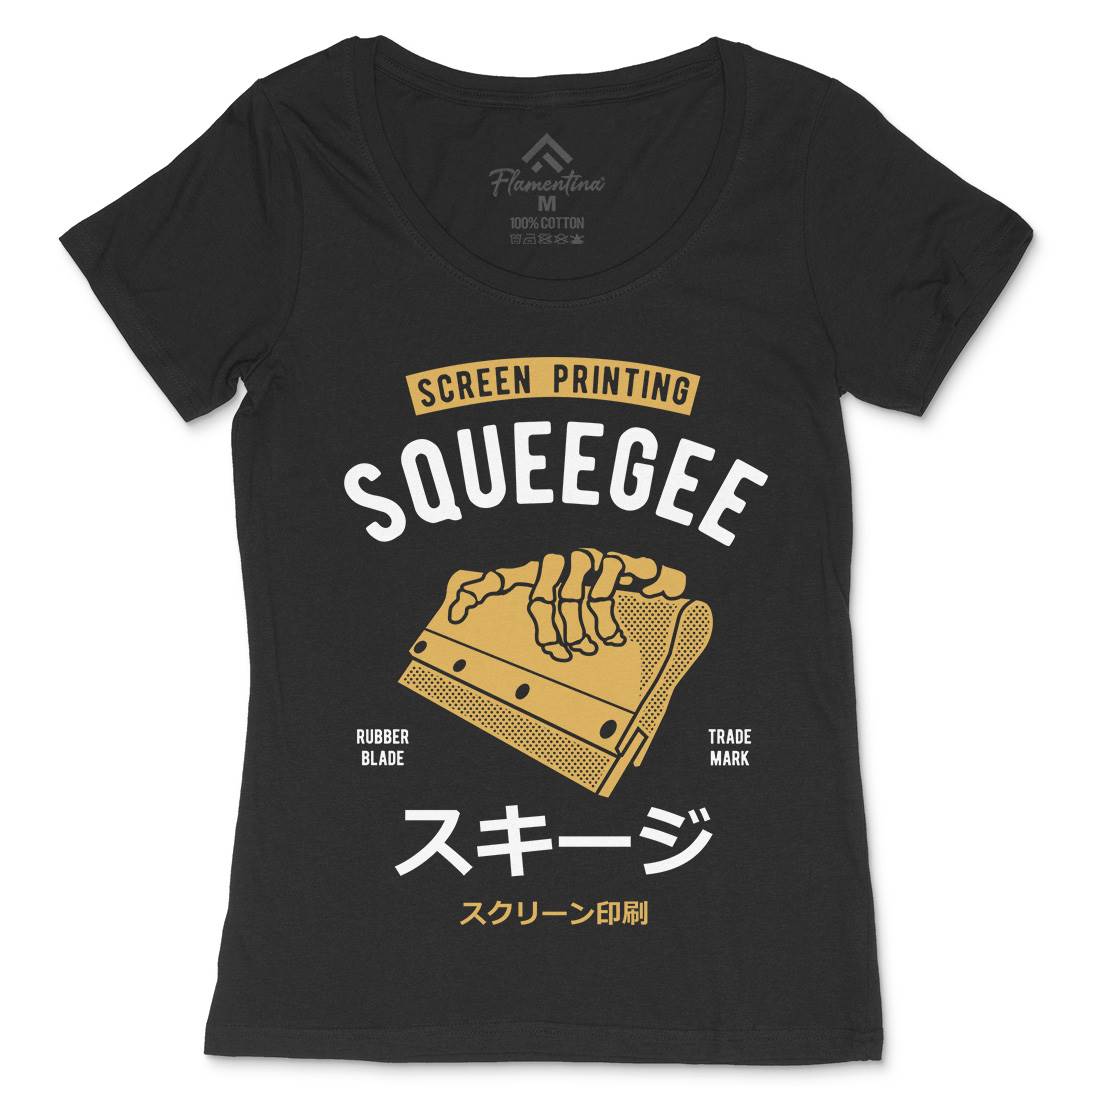 Squeegee Social Club Womens Scoop Neck T-Shirt Work A282